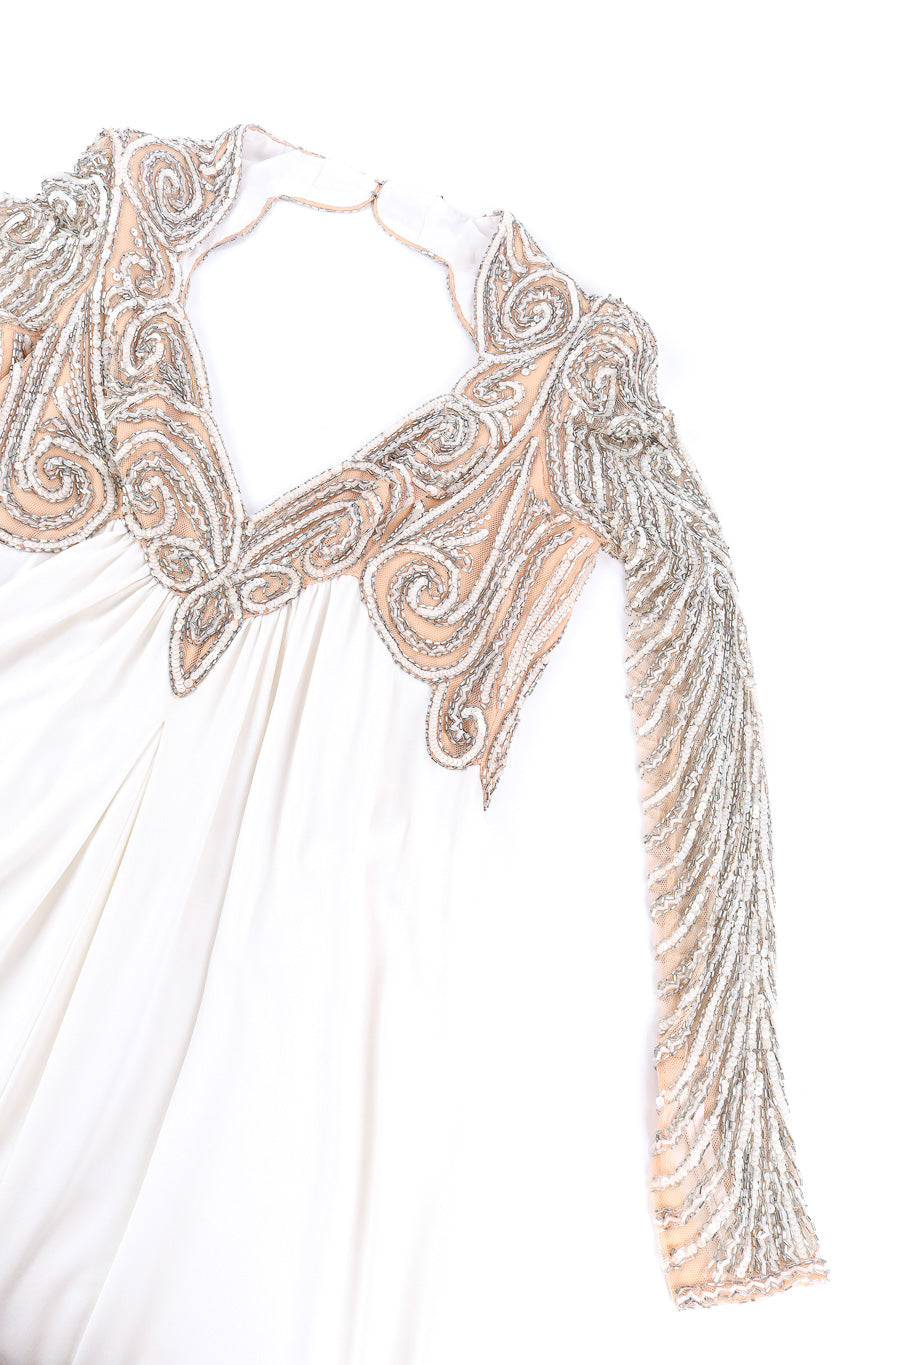 Bob Mackie sequin swirl empire gown flat-lay @recessla